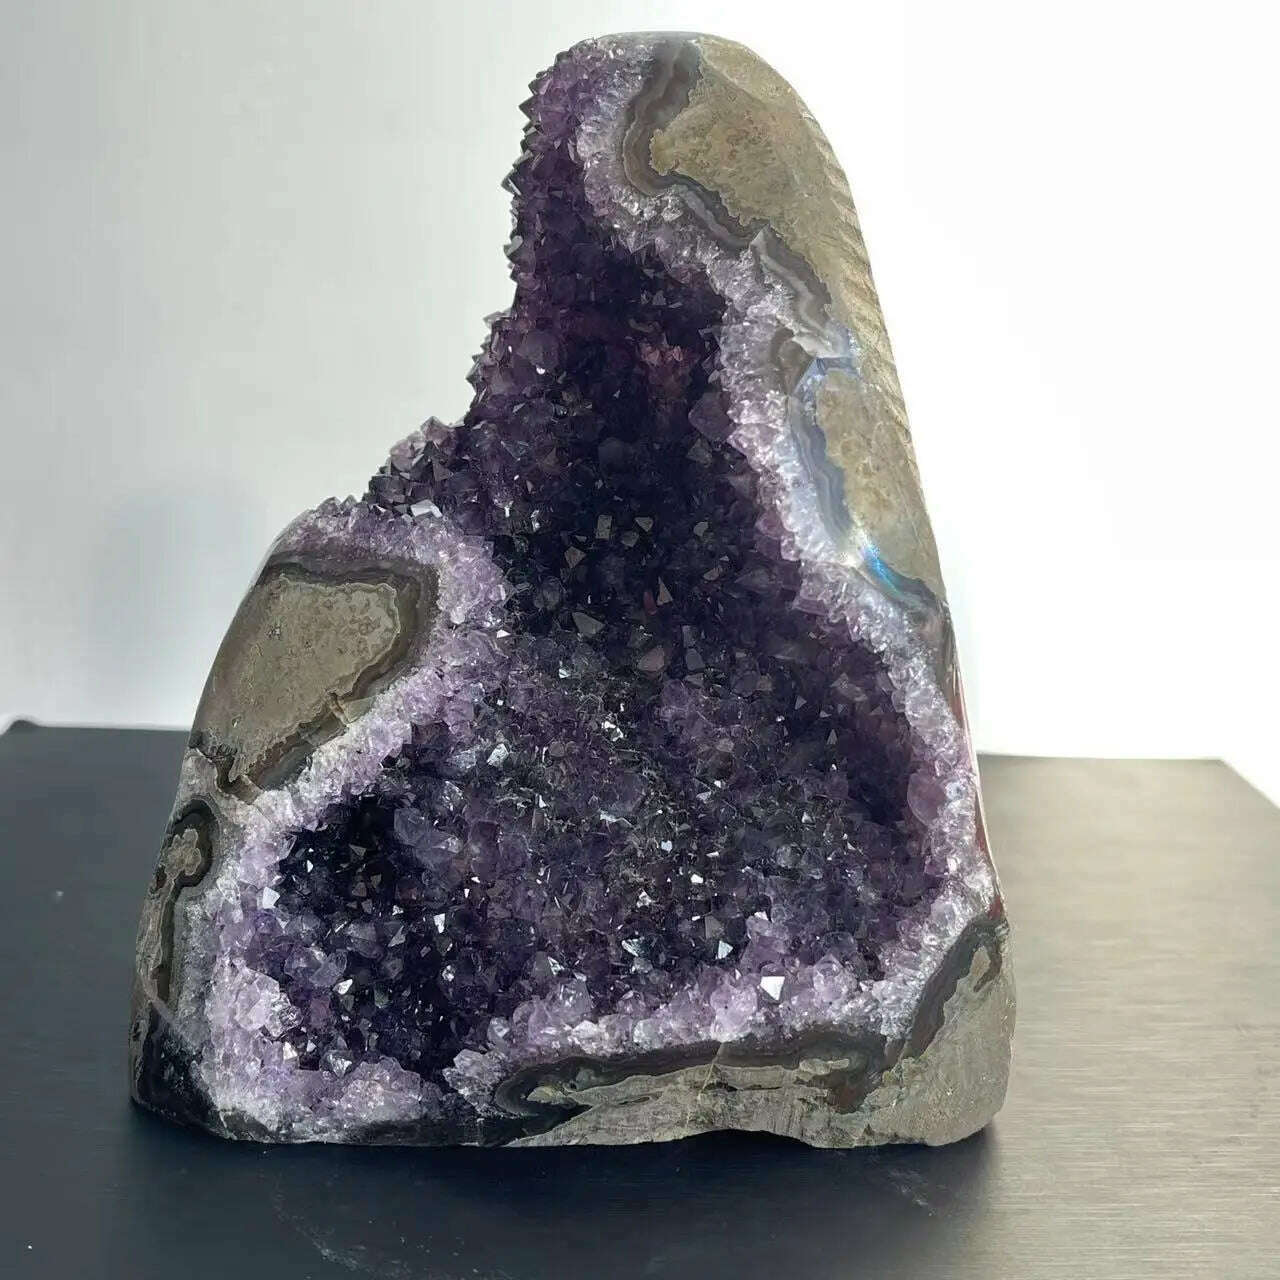 KIMLUD, 1PC Natural Amethyst Crystal Cluster Quartz Raw Crystals Healing Stone Ore Mineral Home Decor Purple Cornucopia Feng Shui Stone, 1.6-1.8kg, KIMLUD Womens Clothes